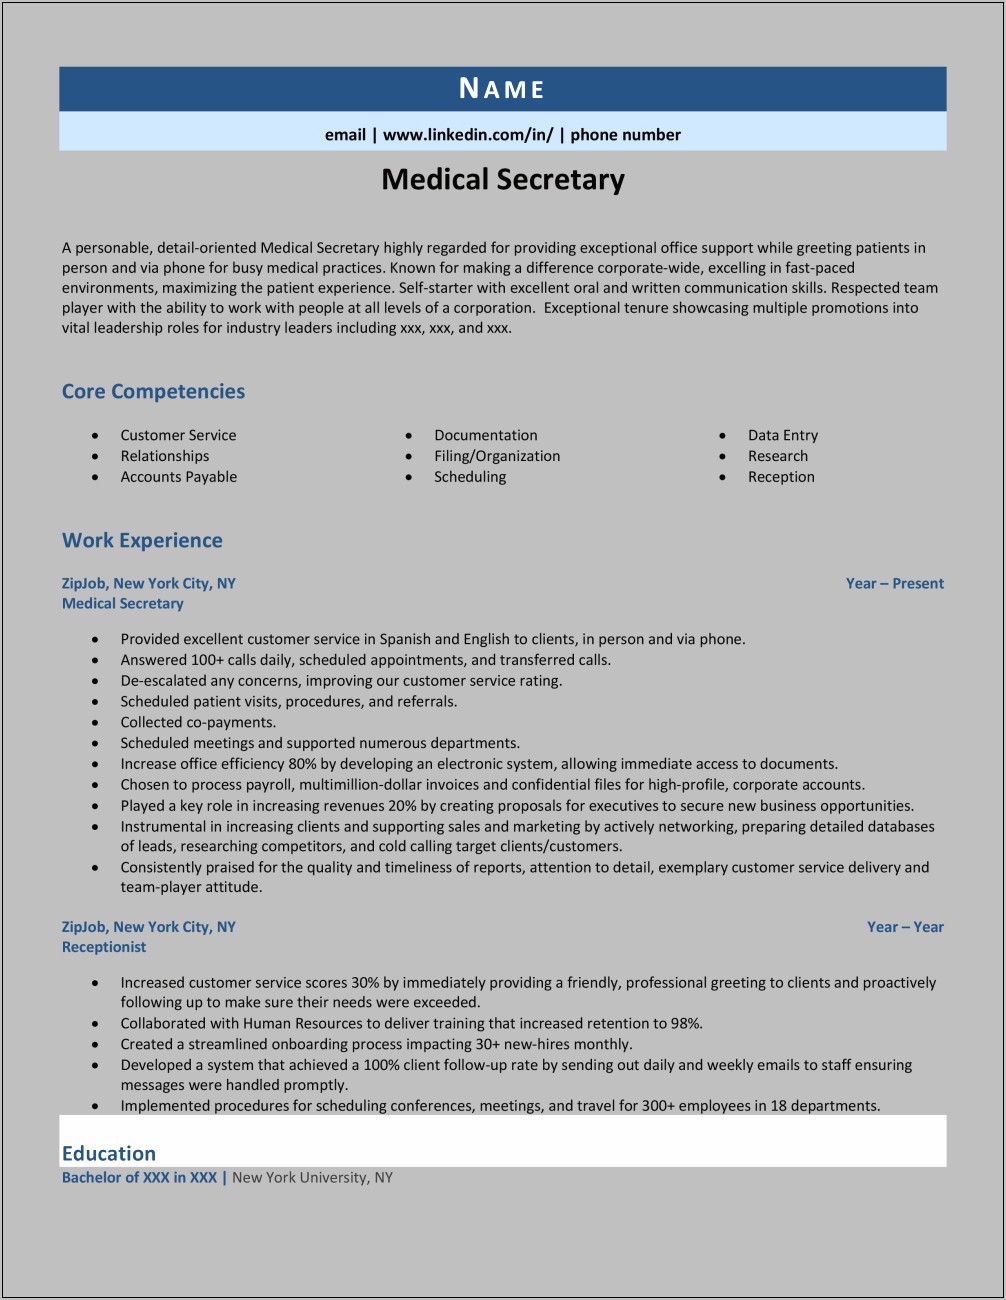 Medical Secretary Job Resume Example